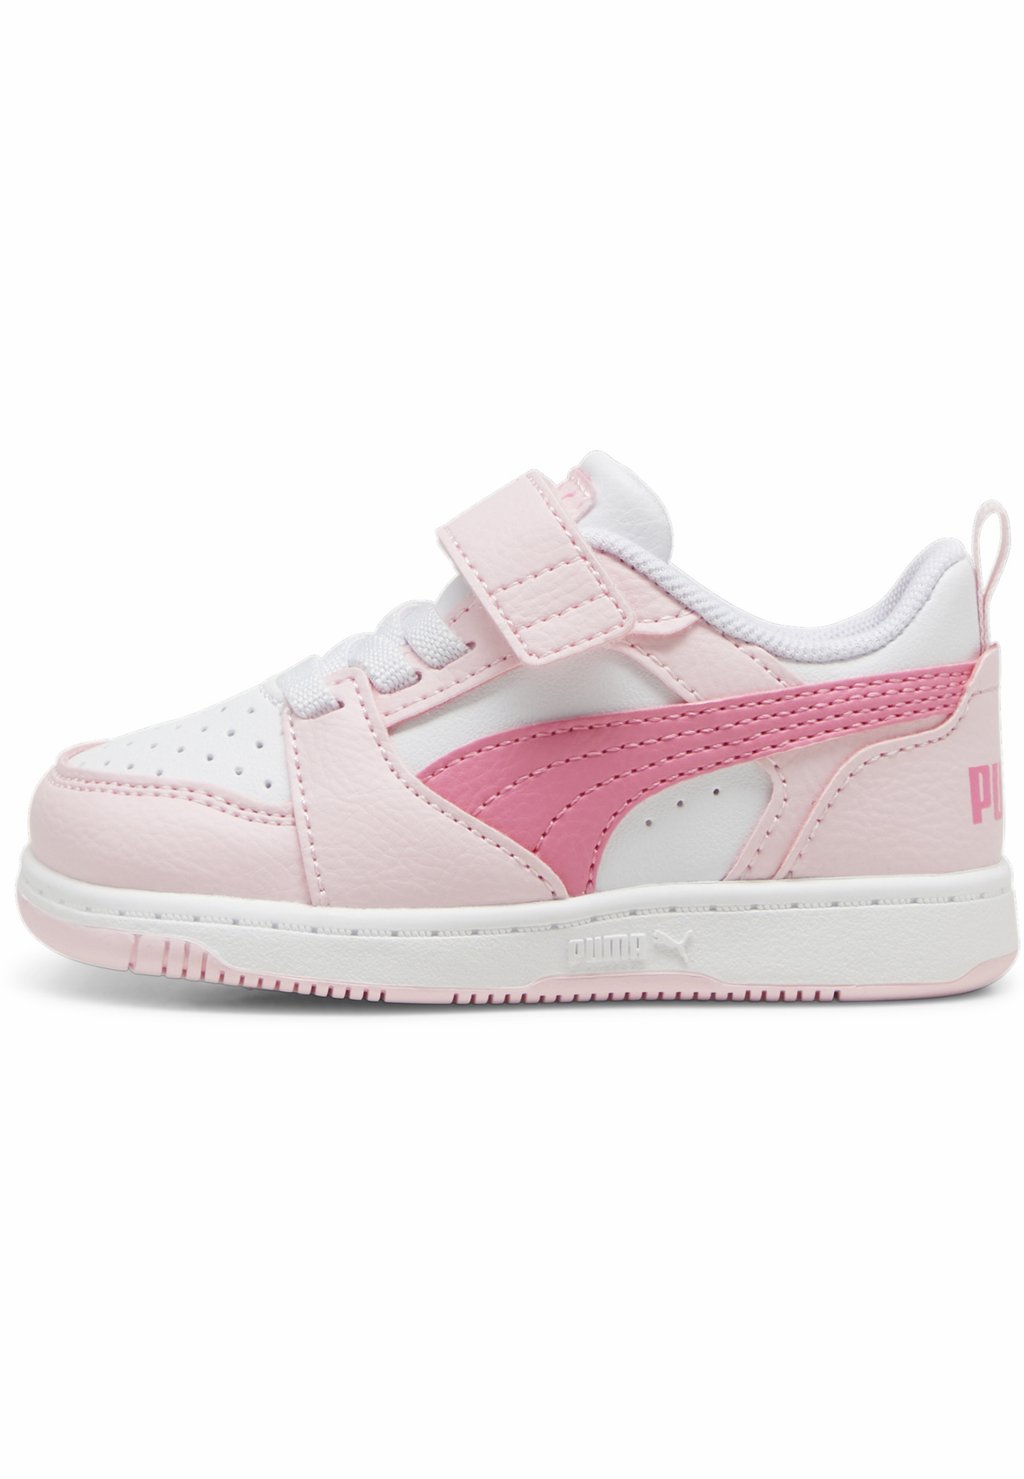 Прогулочная обувь REBOUND Puma, цвет white fast pink whisp of pink